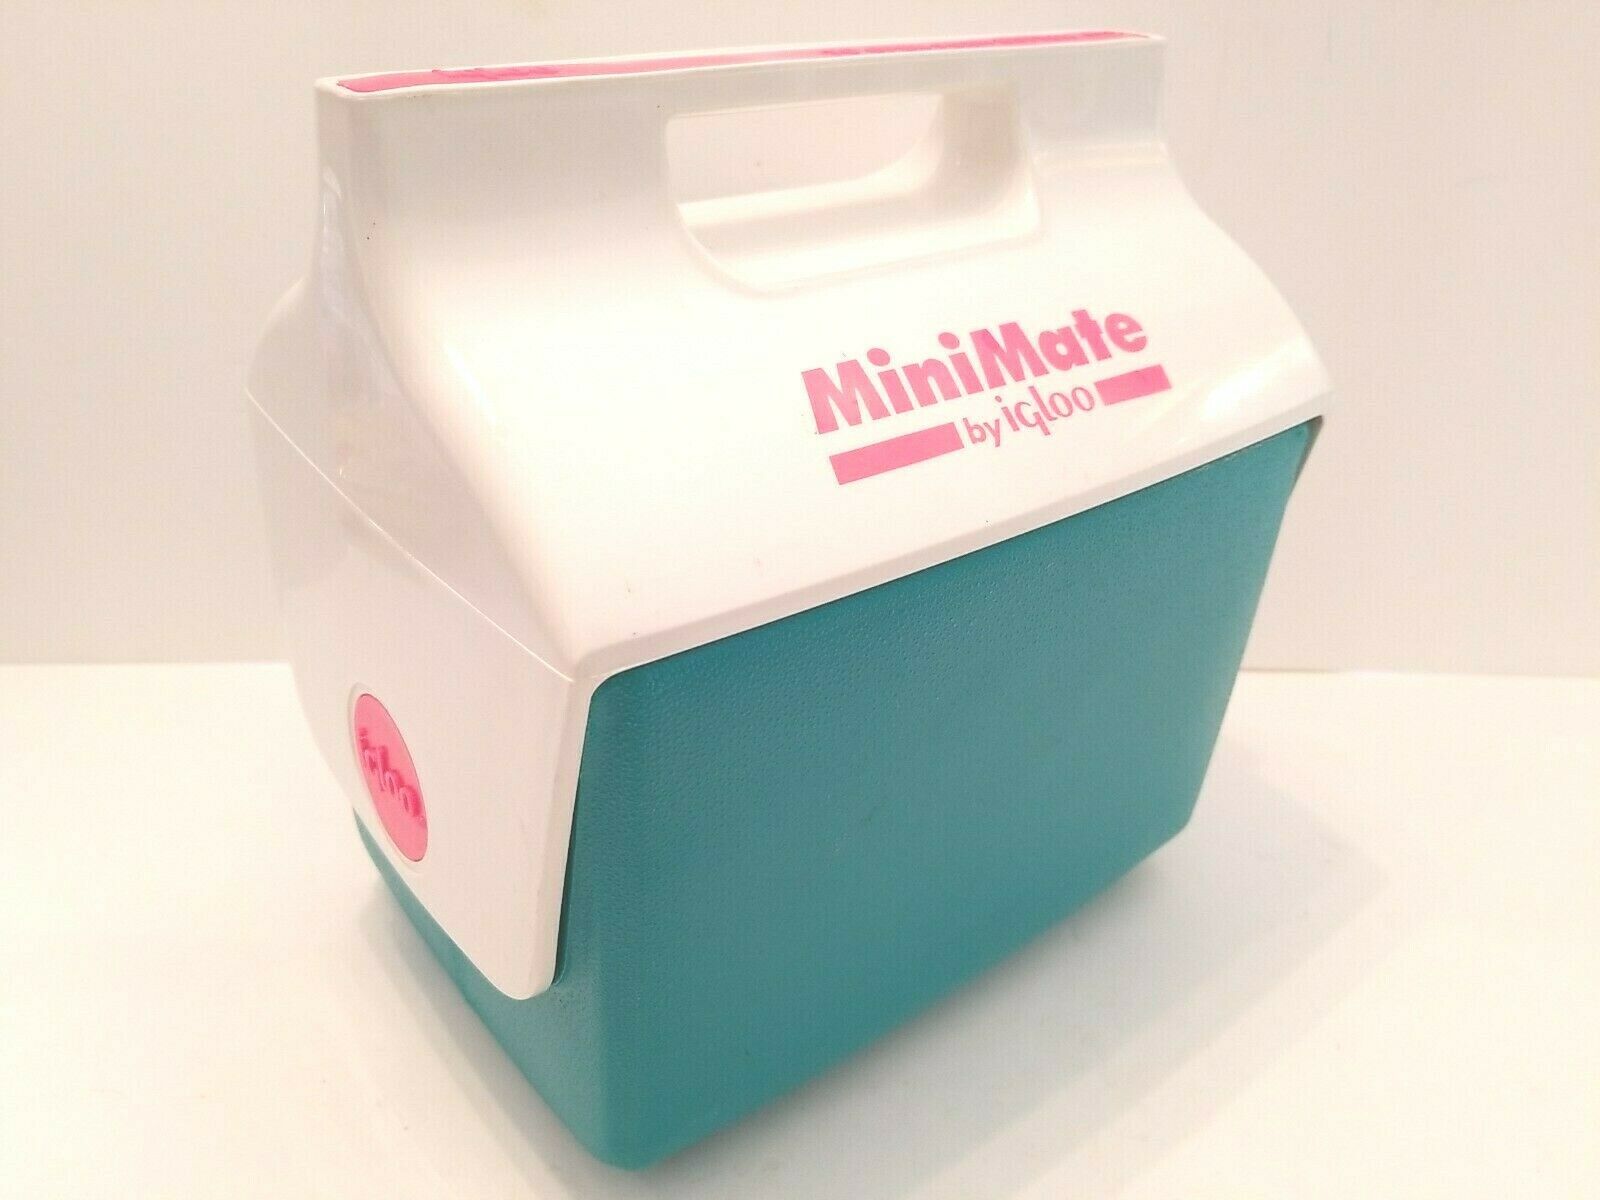 Vintage Hot Pink Rubbermaid 5 Quart Lunch Box Cooler Summer Cooler